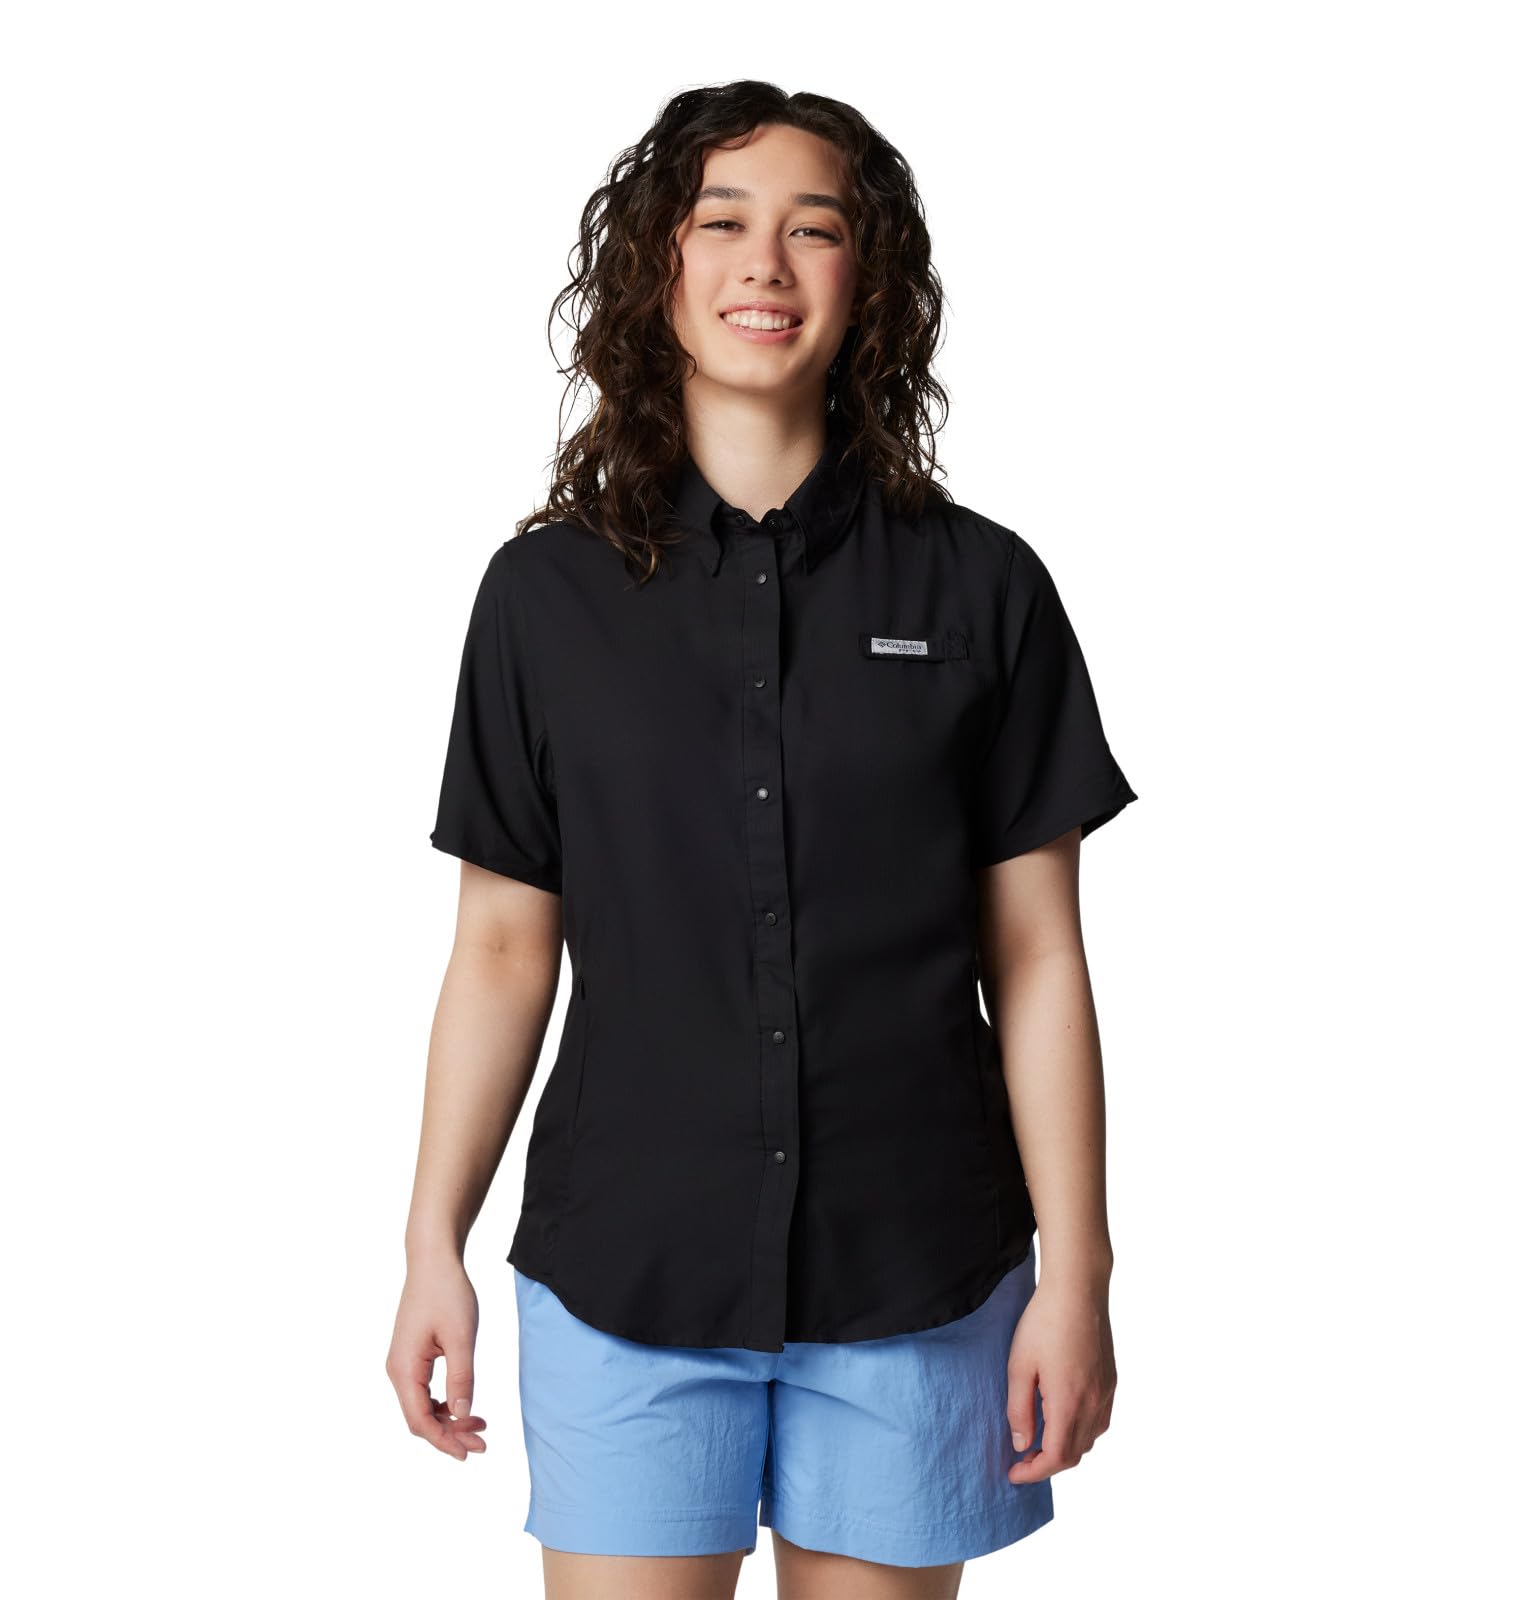 Columbia Women's Tamiami II Short Sleeve Shirt, Medium, Black